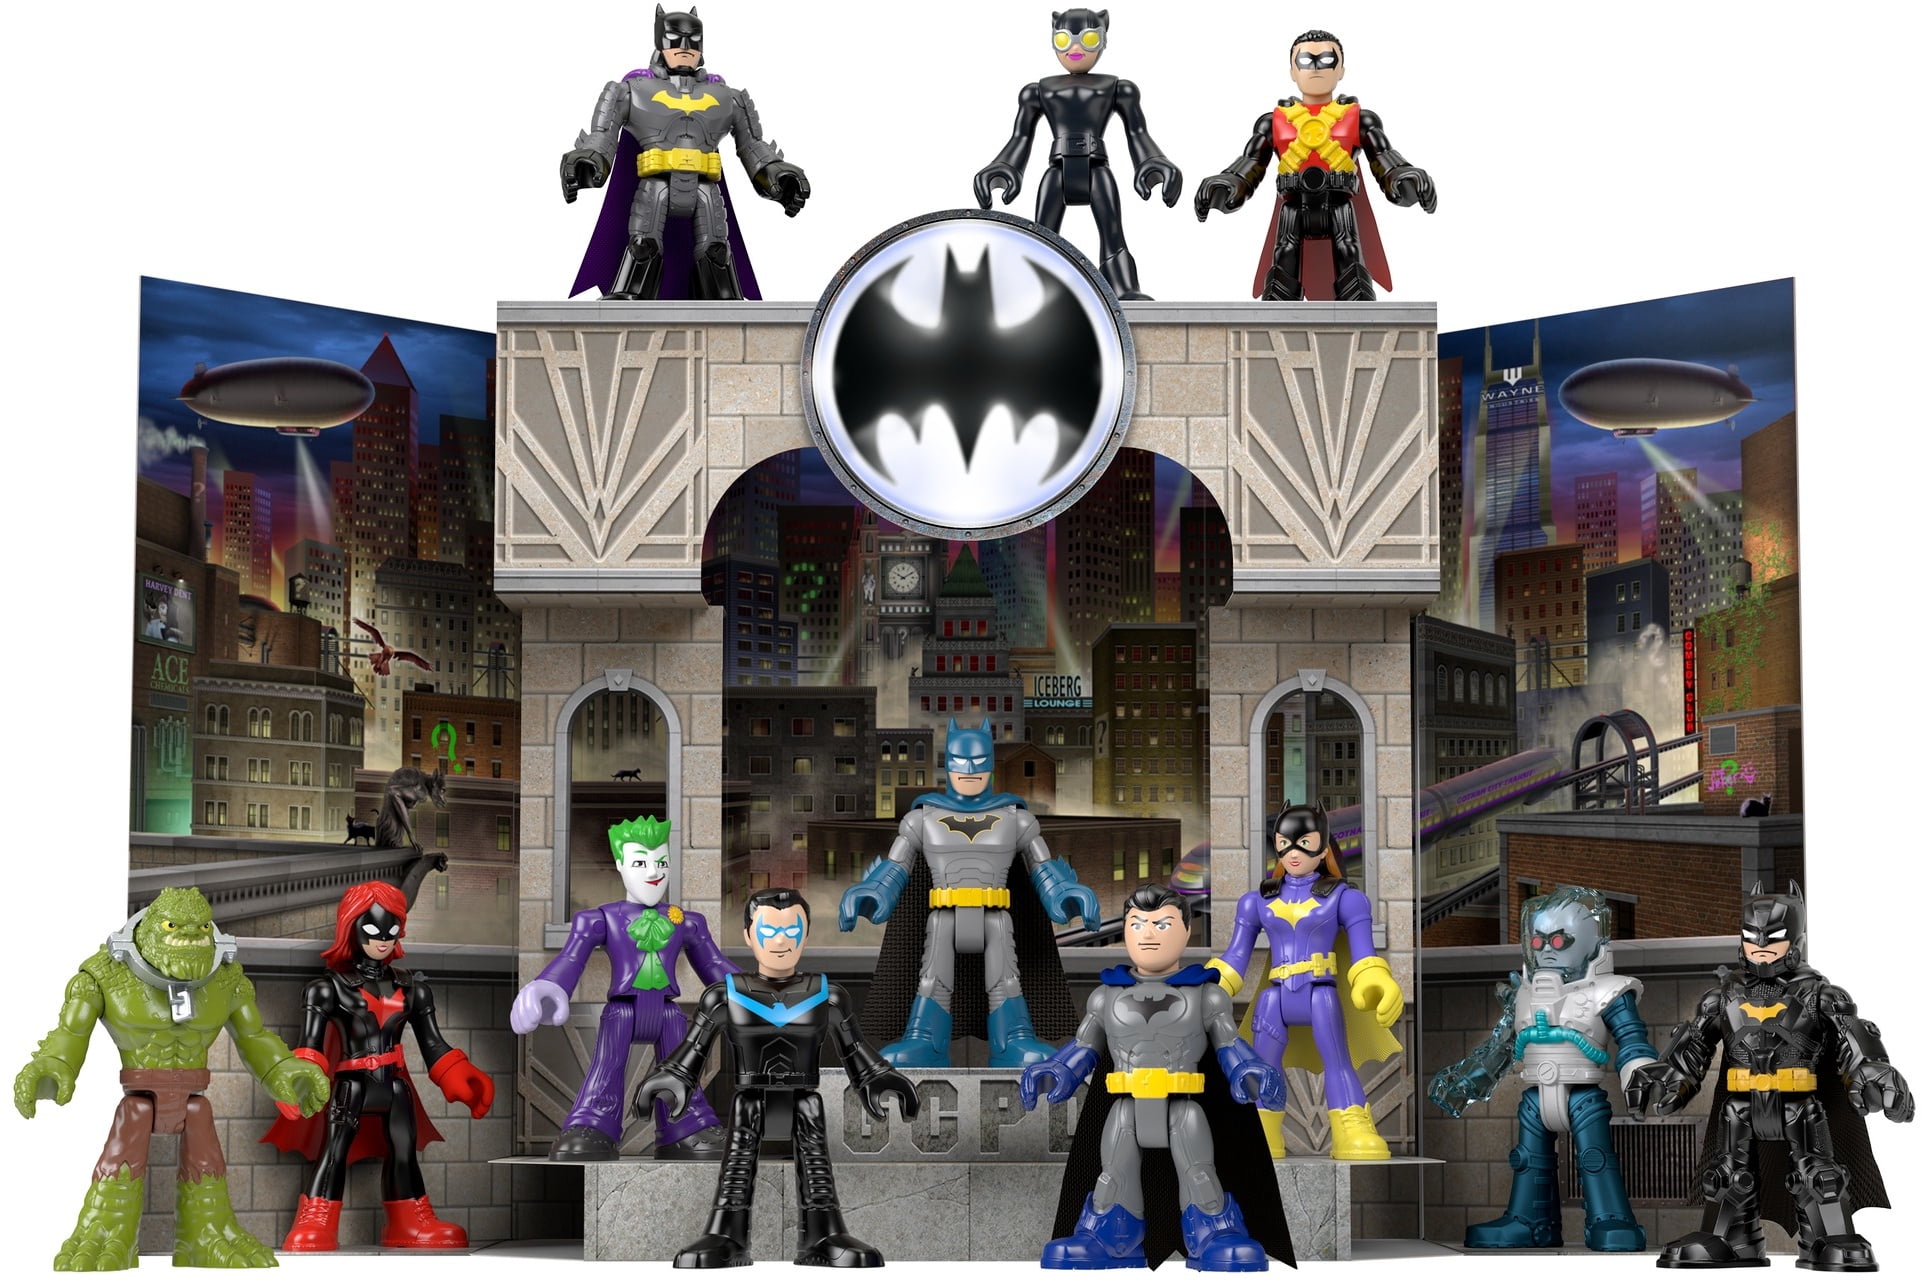 Fisher Price Imaginext DC Super Friends Batman Gotham City Center Joker set 